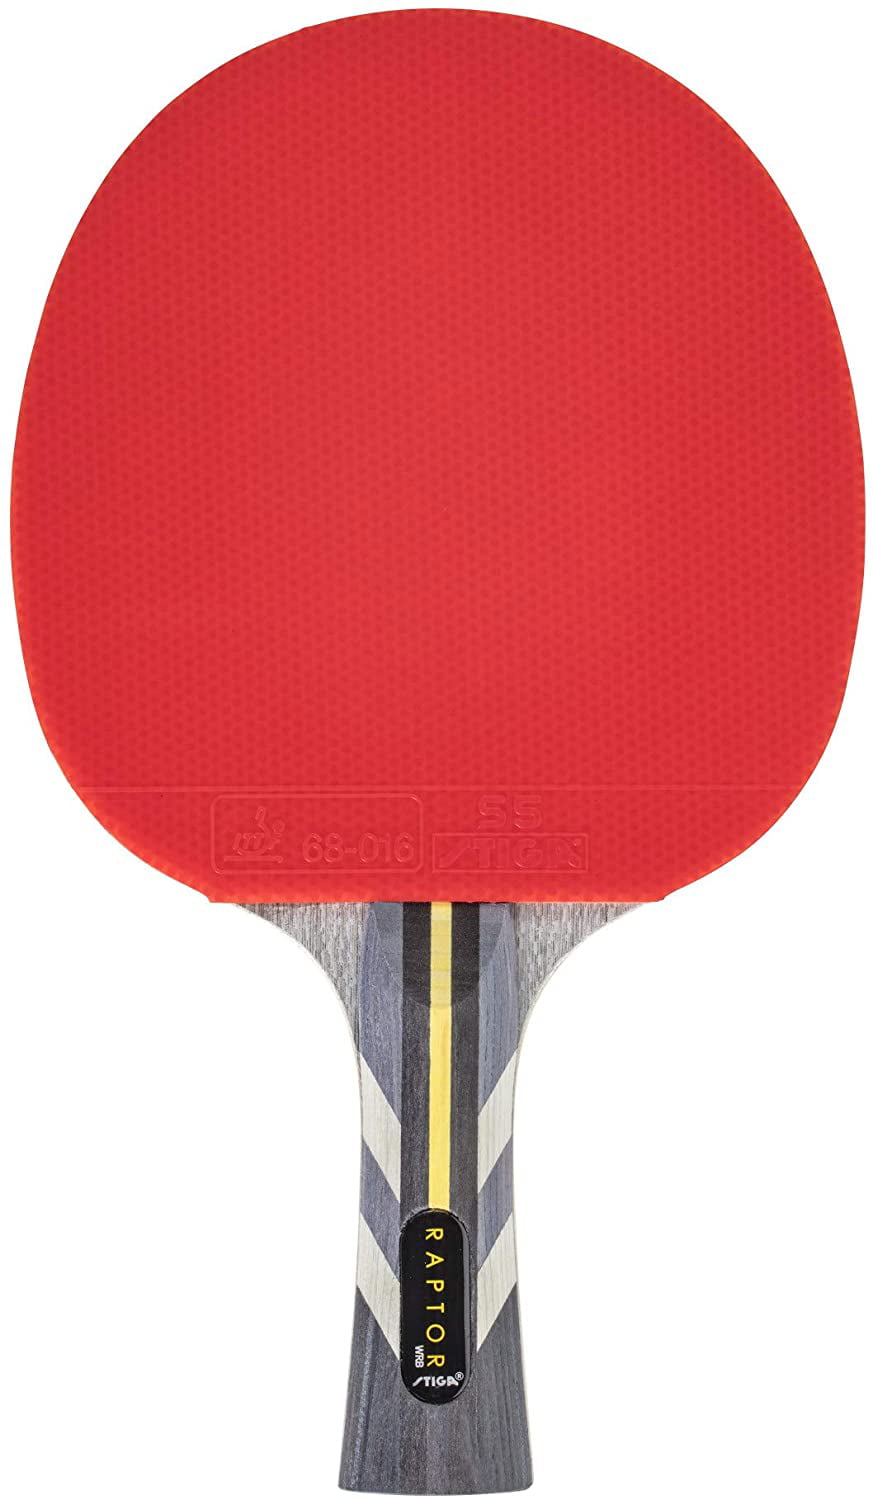 ONE Stiga RAPTOR Table Tennis Bat Ping Pong Racquet Black/Red 